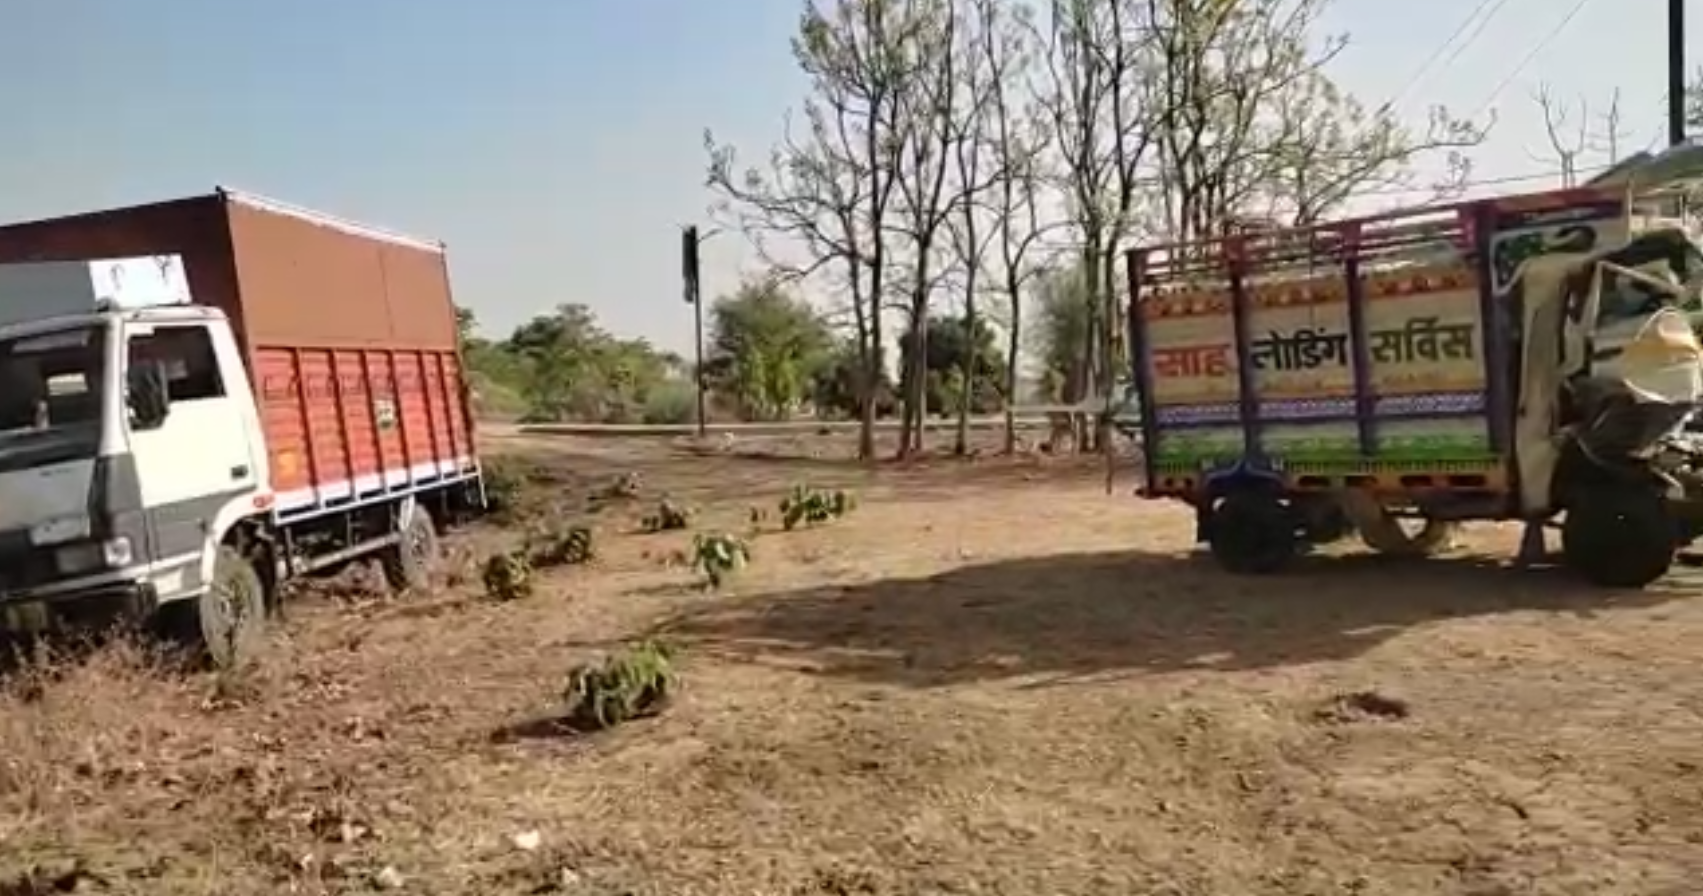 Direct collision between Tata Magic and Eicher trucks